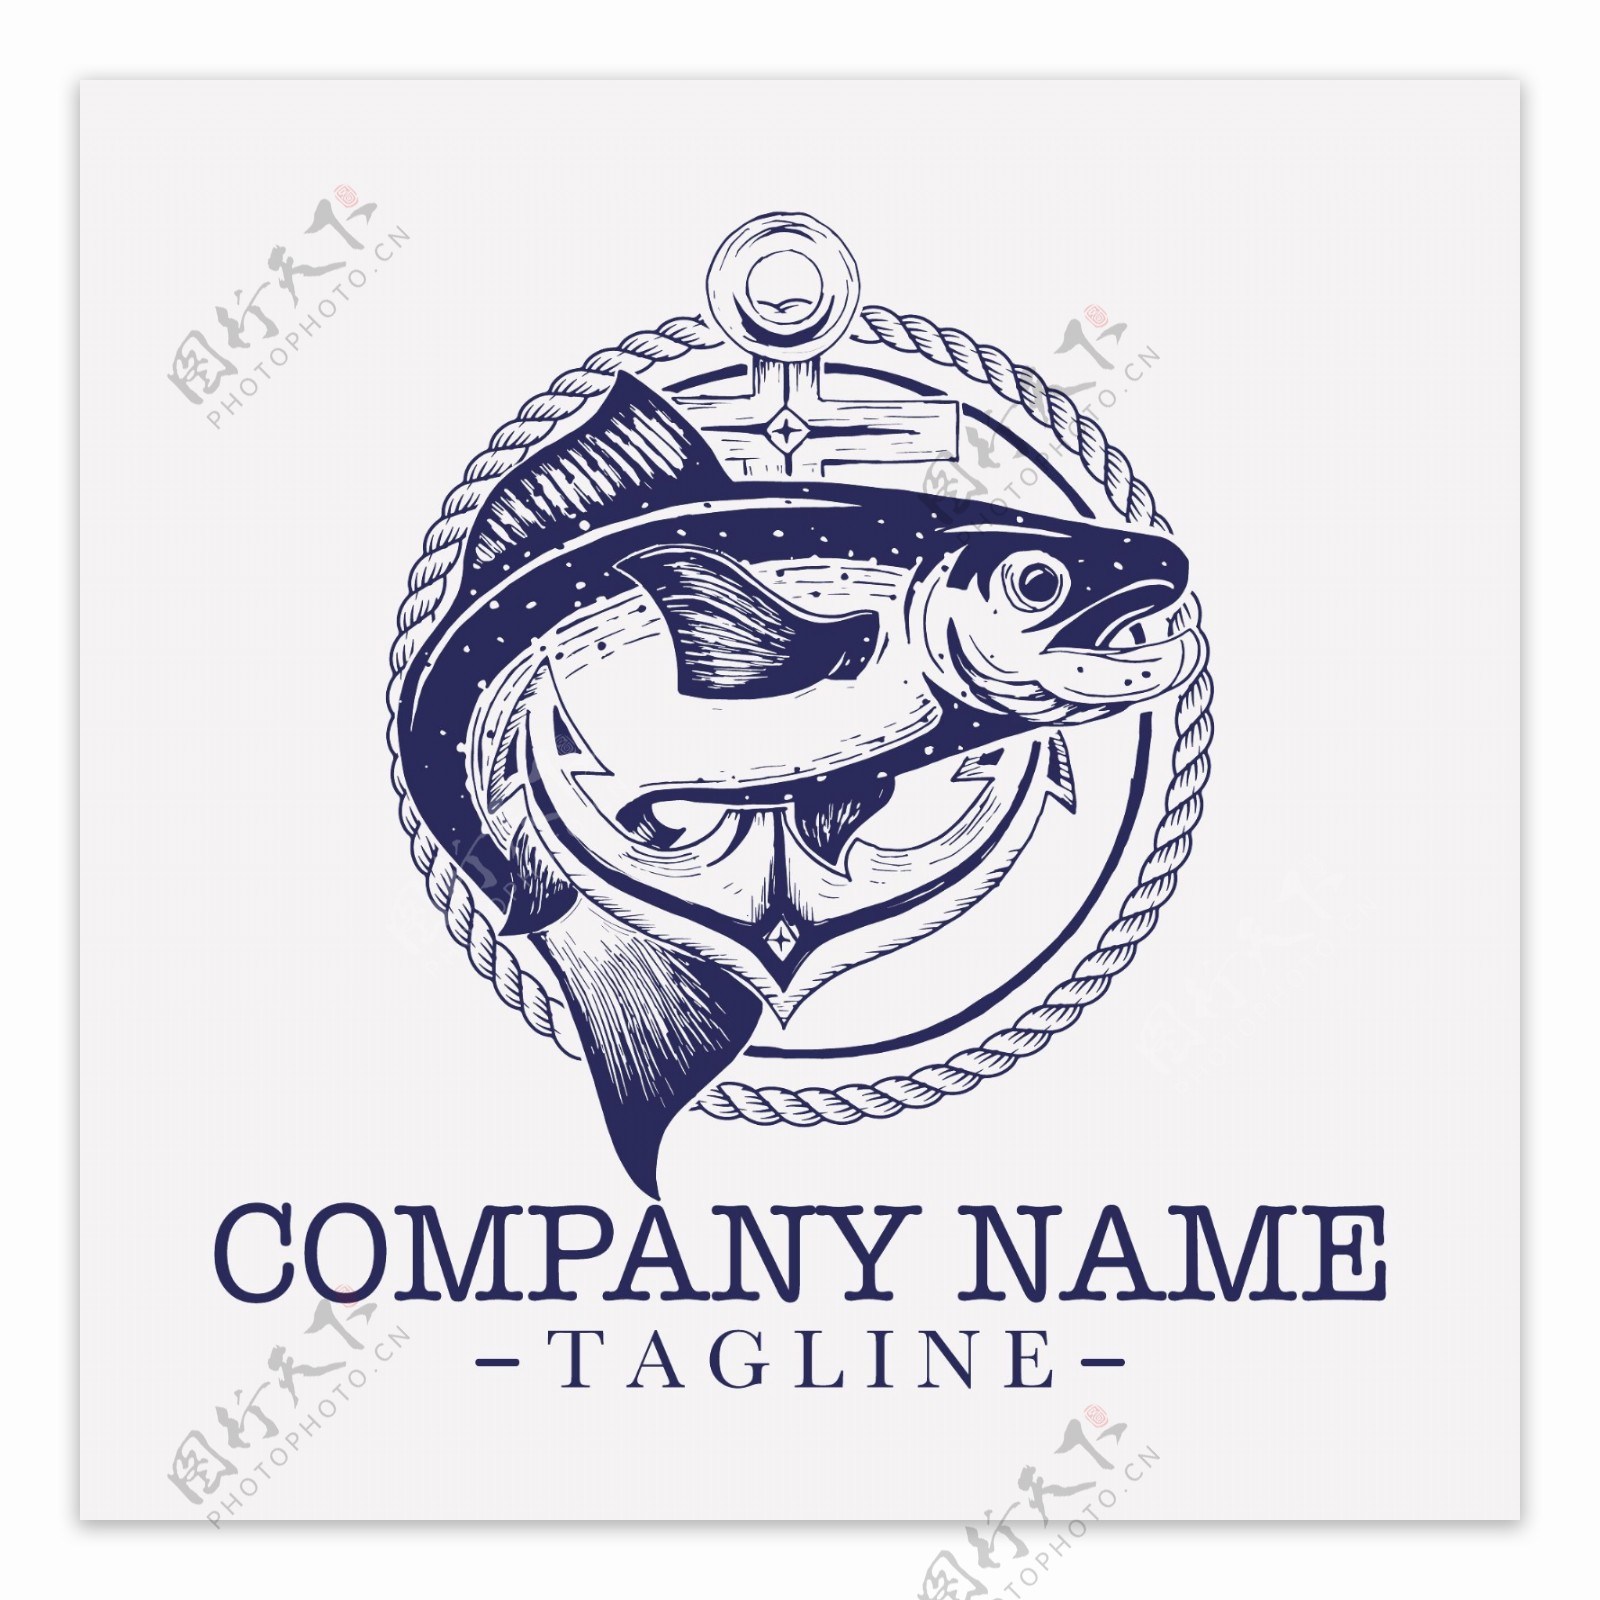 鱼logo模板